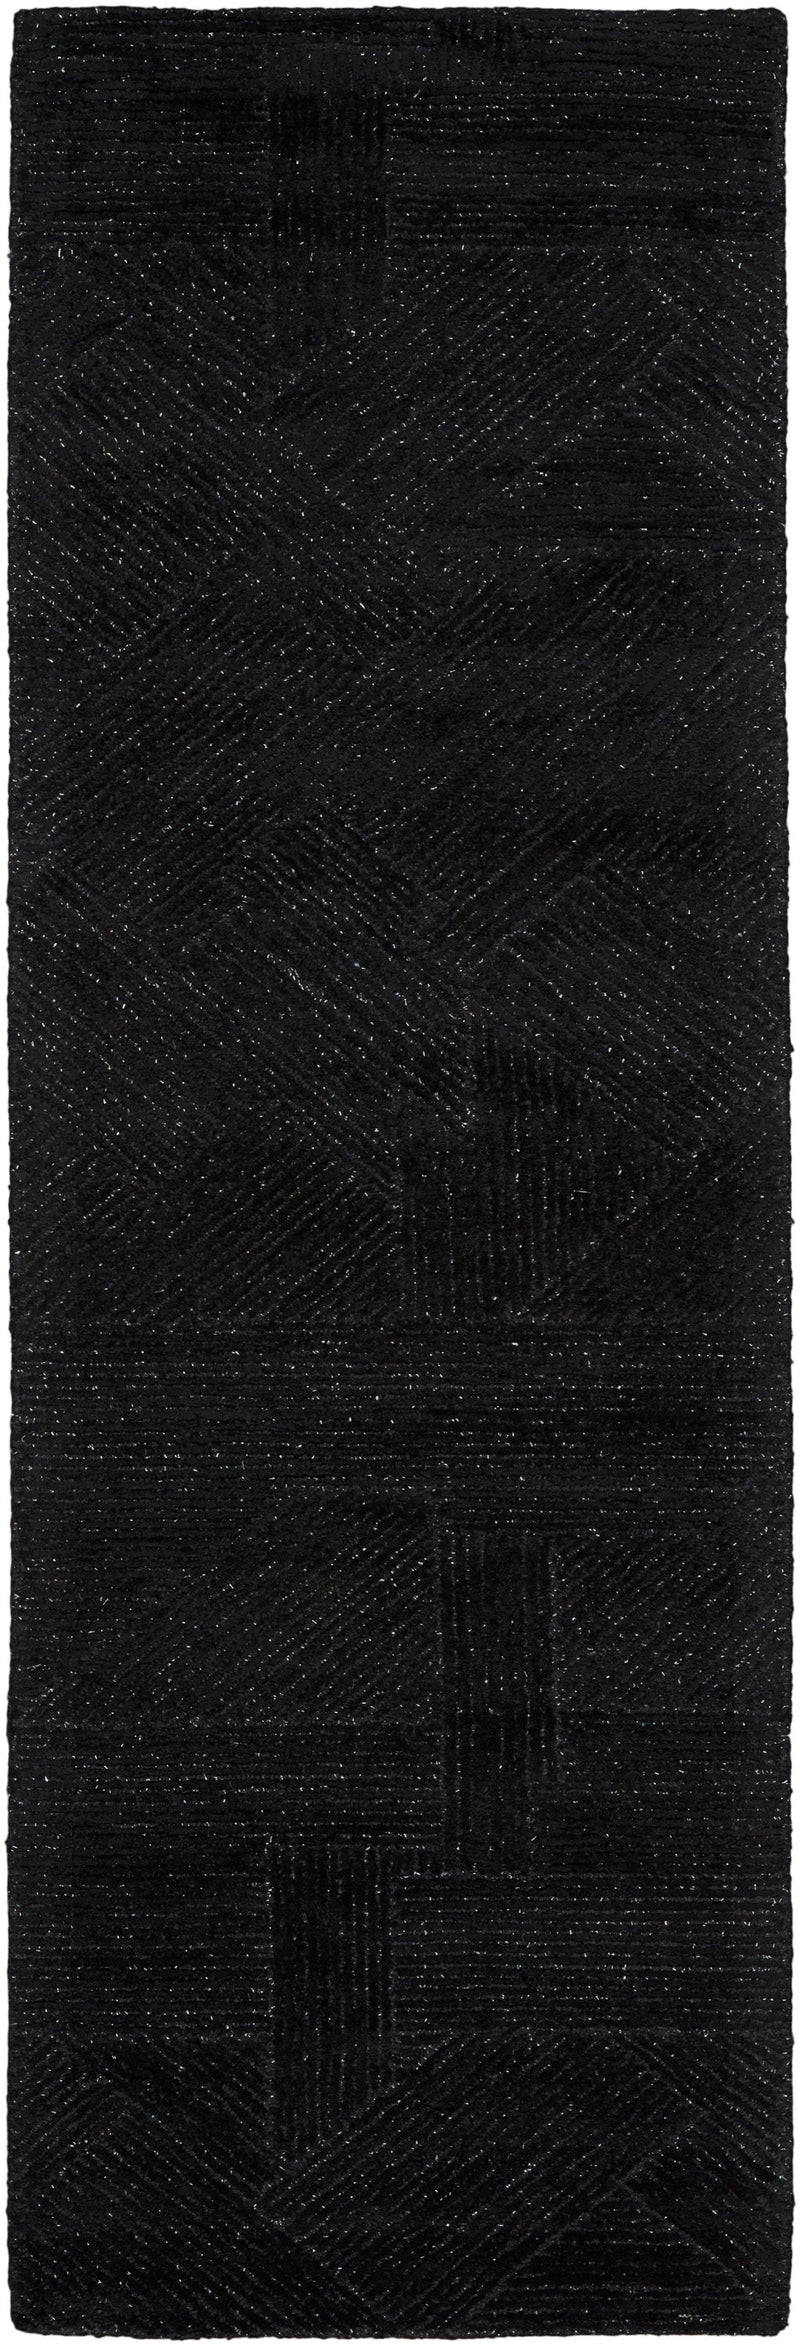 media image for ma30 star handmade black rug by nourison 99446880871 redo 2 23